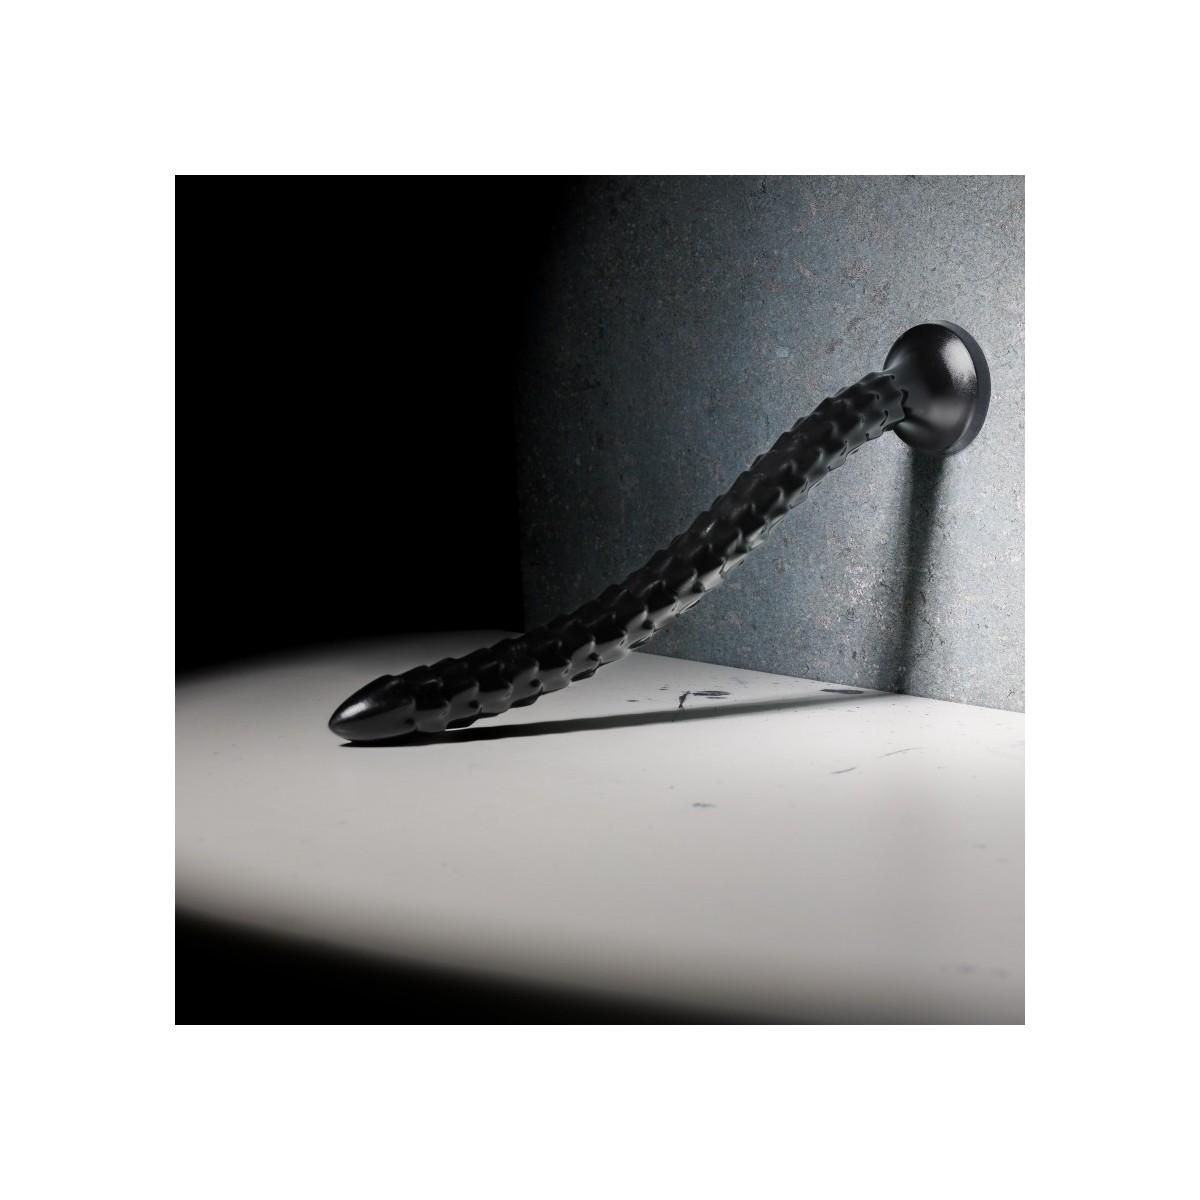 Fallo anale con ventosa Scaled Anal Snake 16''/ 40 cm Black